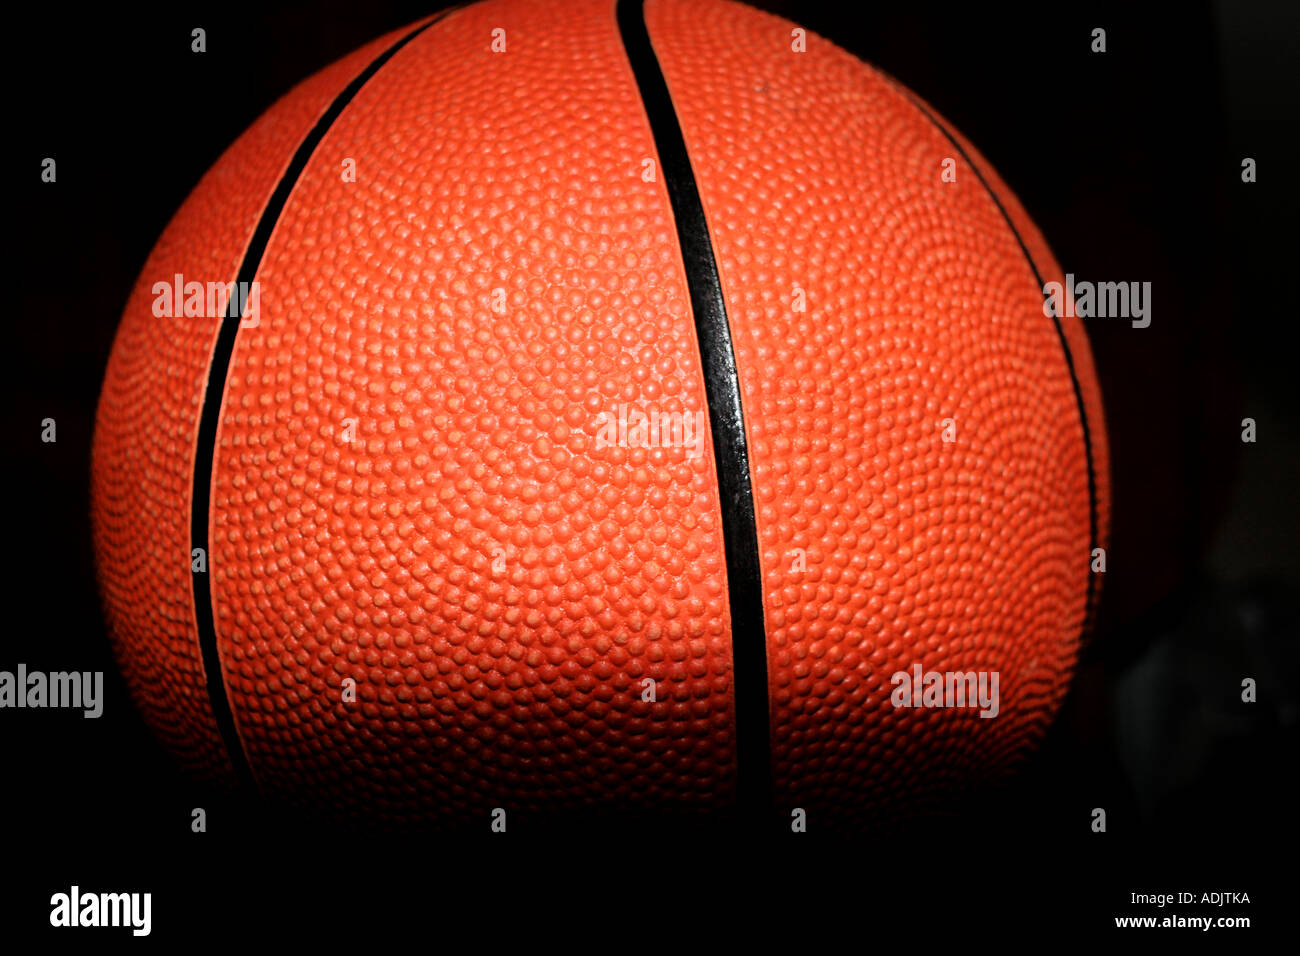 A Basketball close up Stock Photo